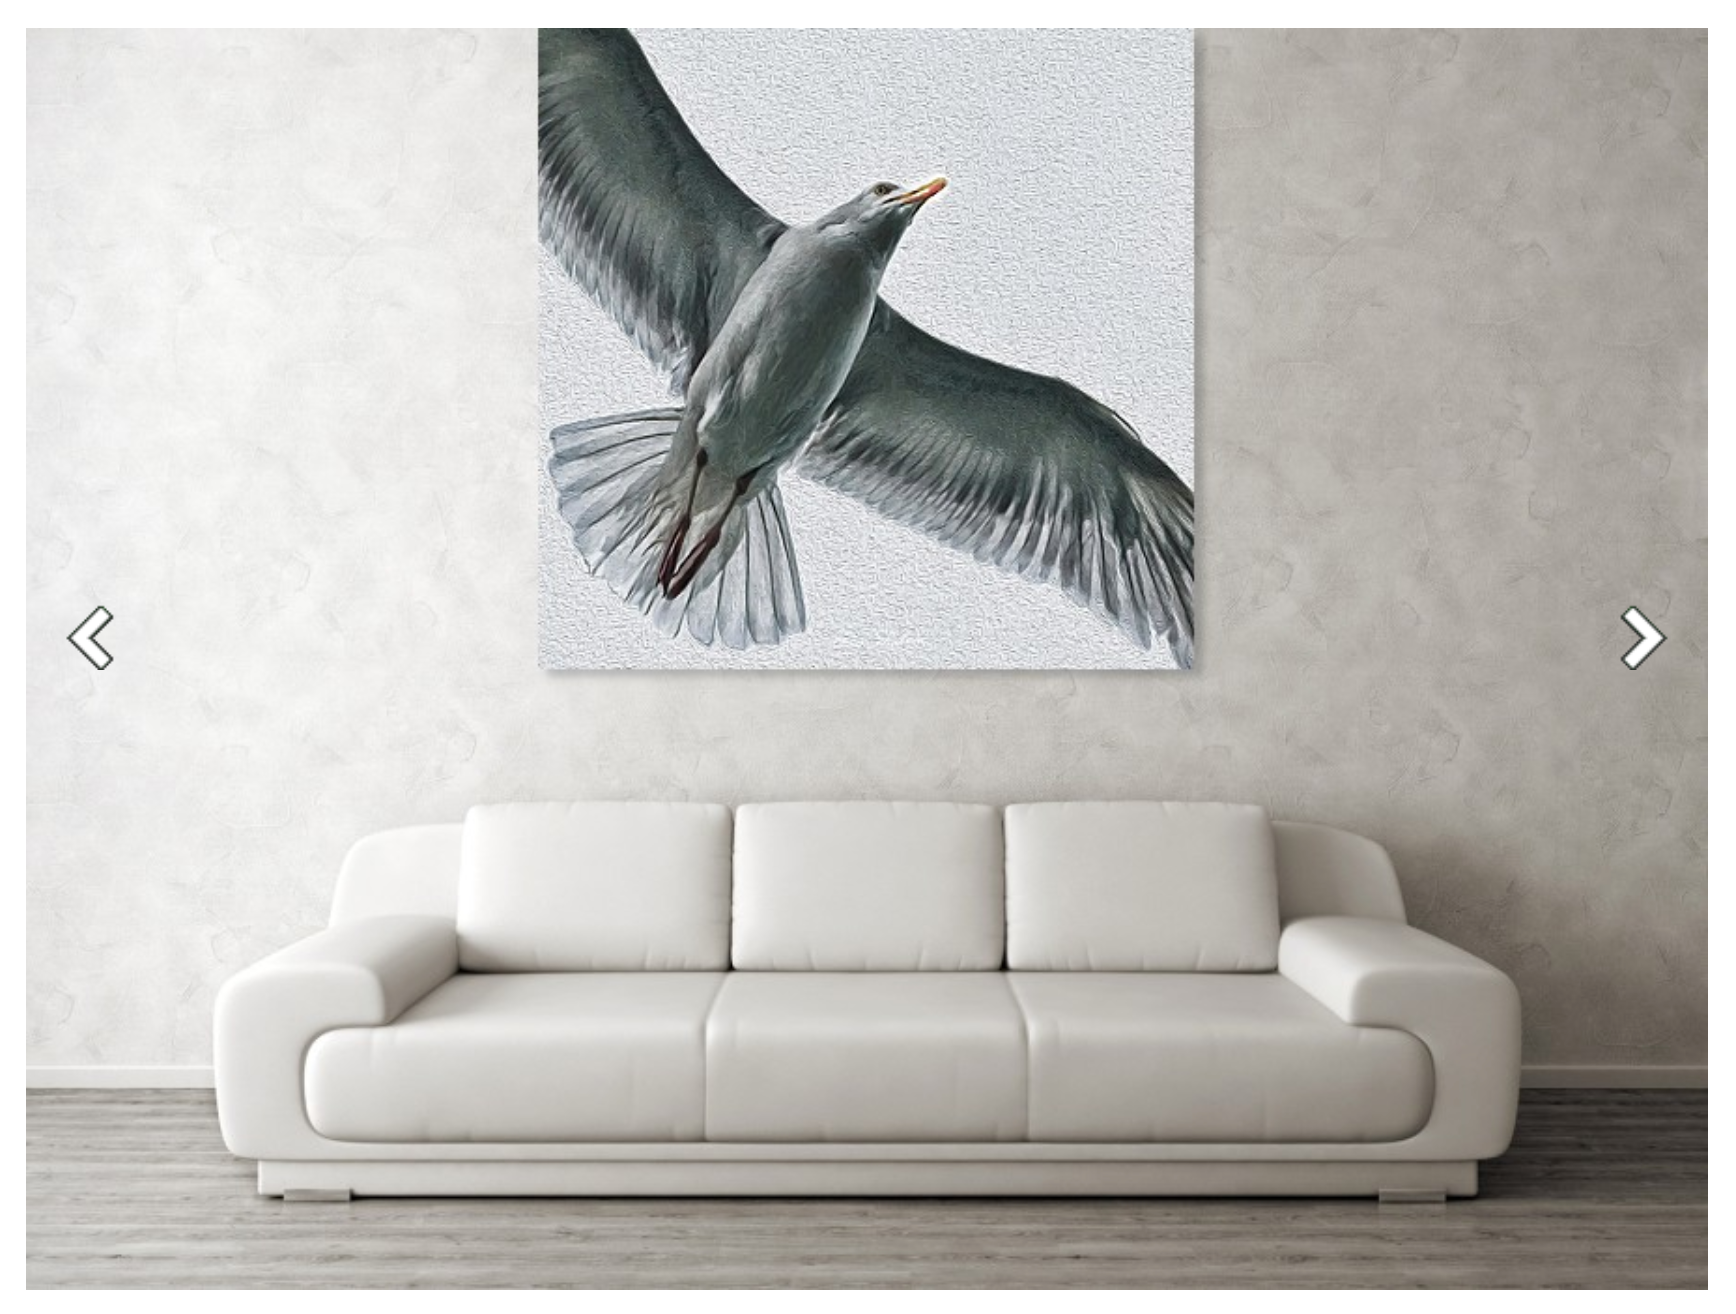 Seagull Metal Print over sofa